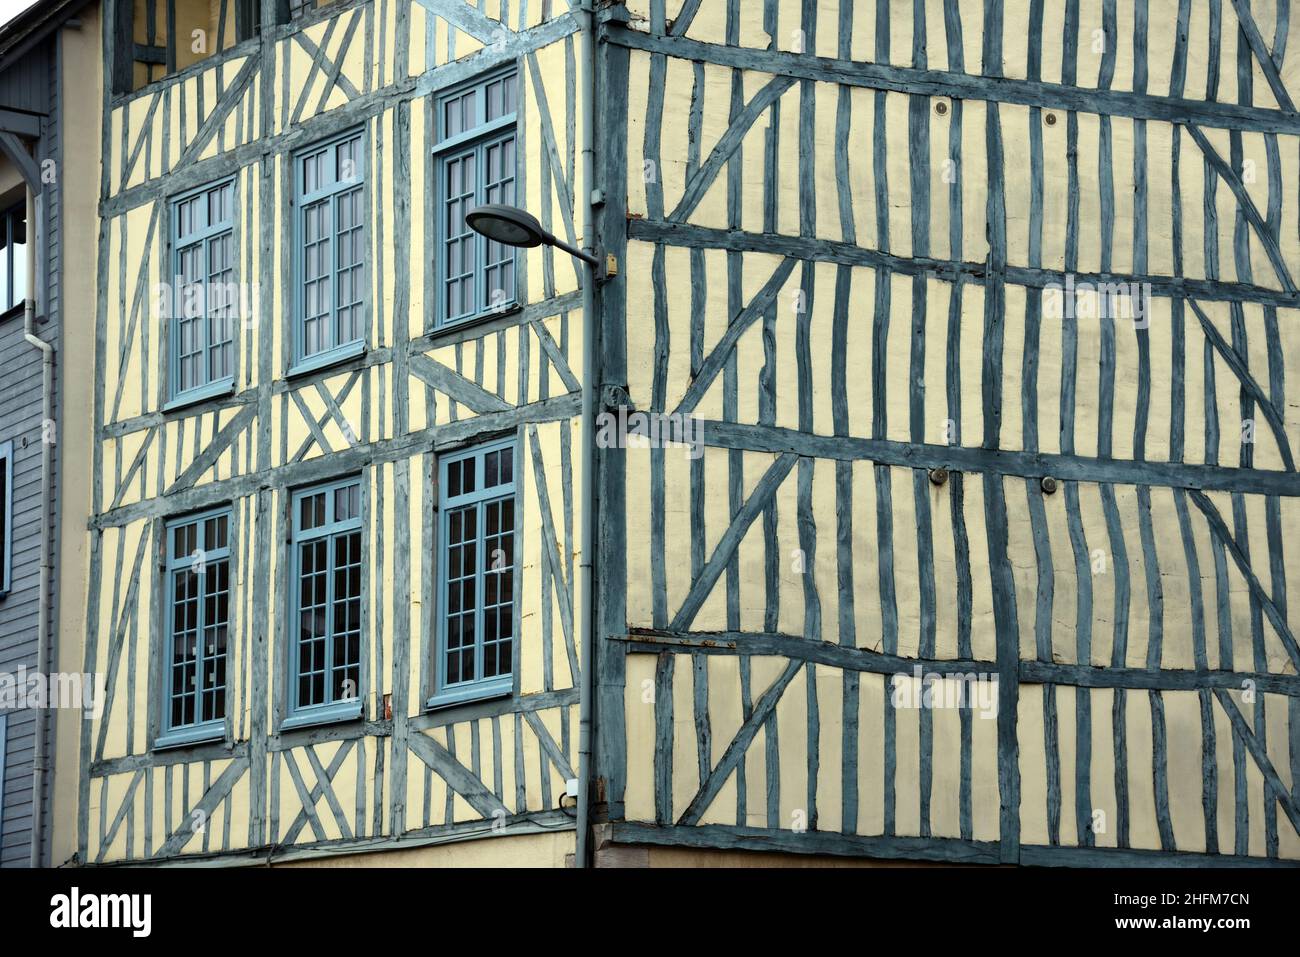 Ventana Patrón de la antigua casa de madera o casa adosada fachada de C17th Edificio histórico en el casco antiguo de Rouen Normandía Francia Foto de stock